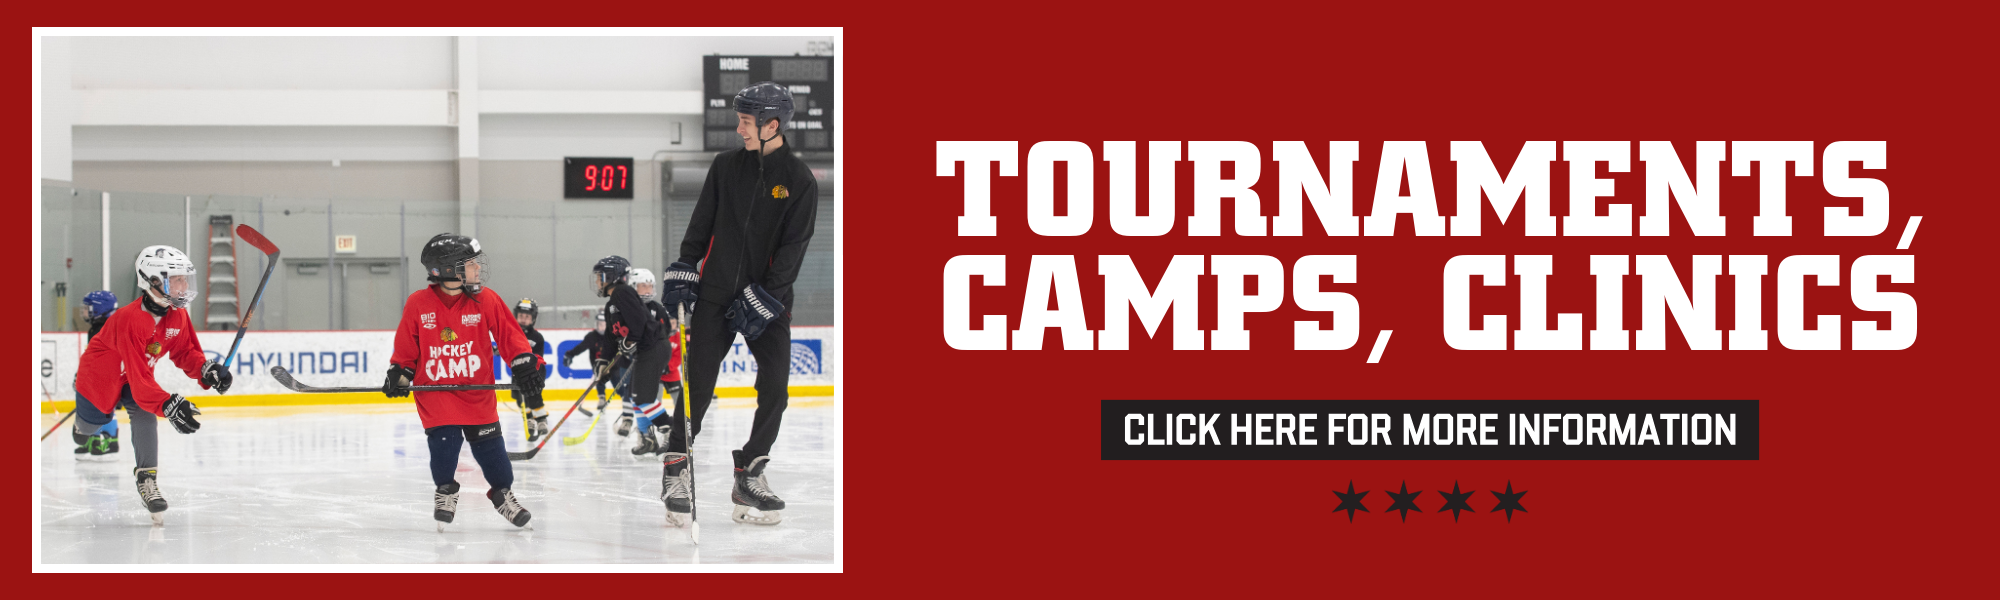 Website Hockey Page 4